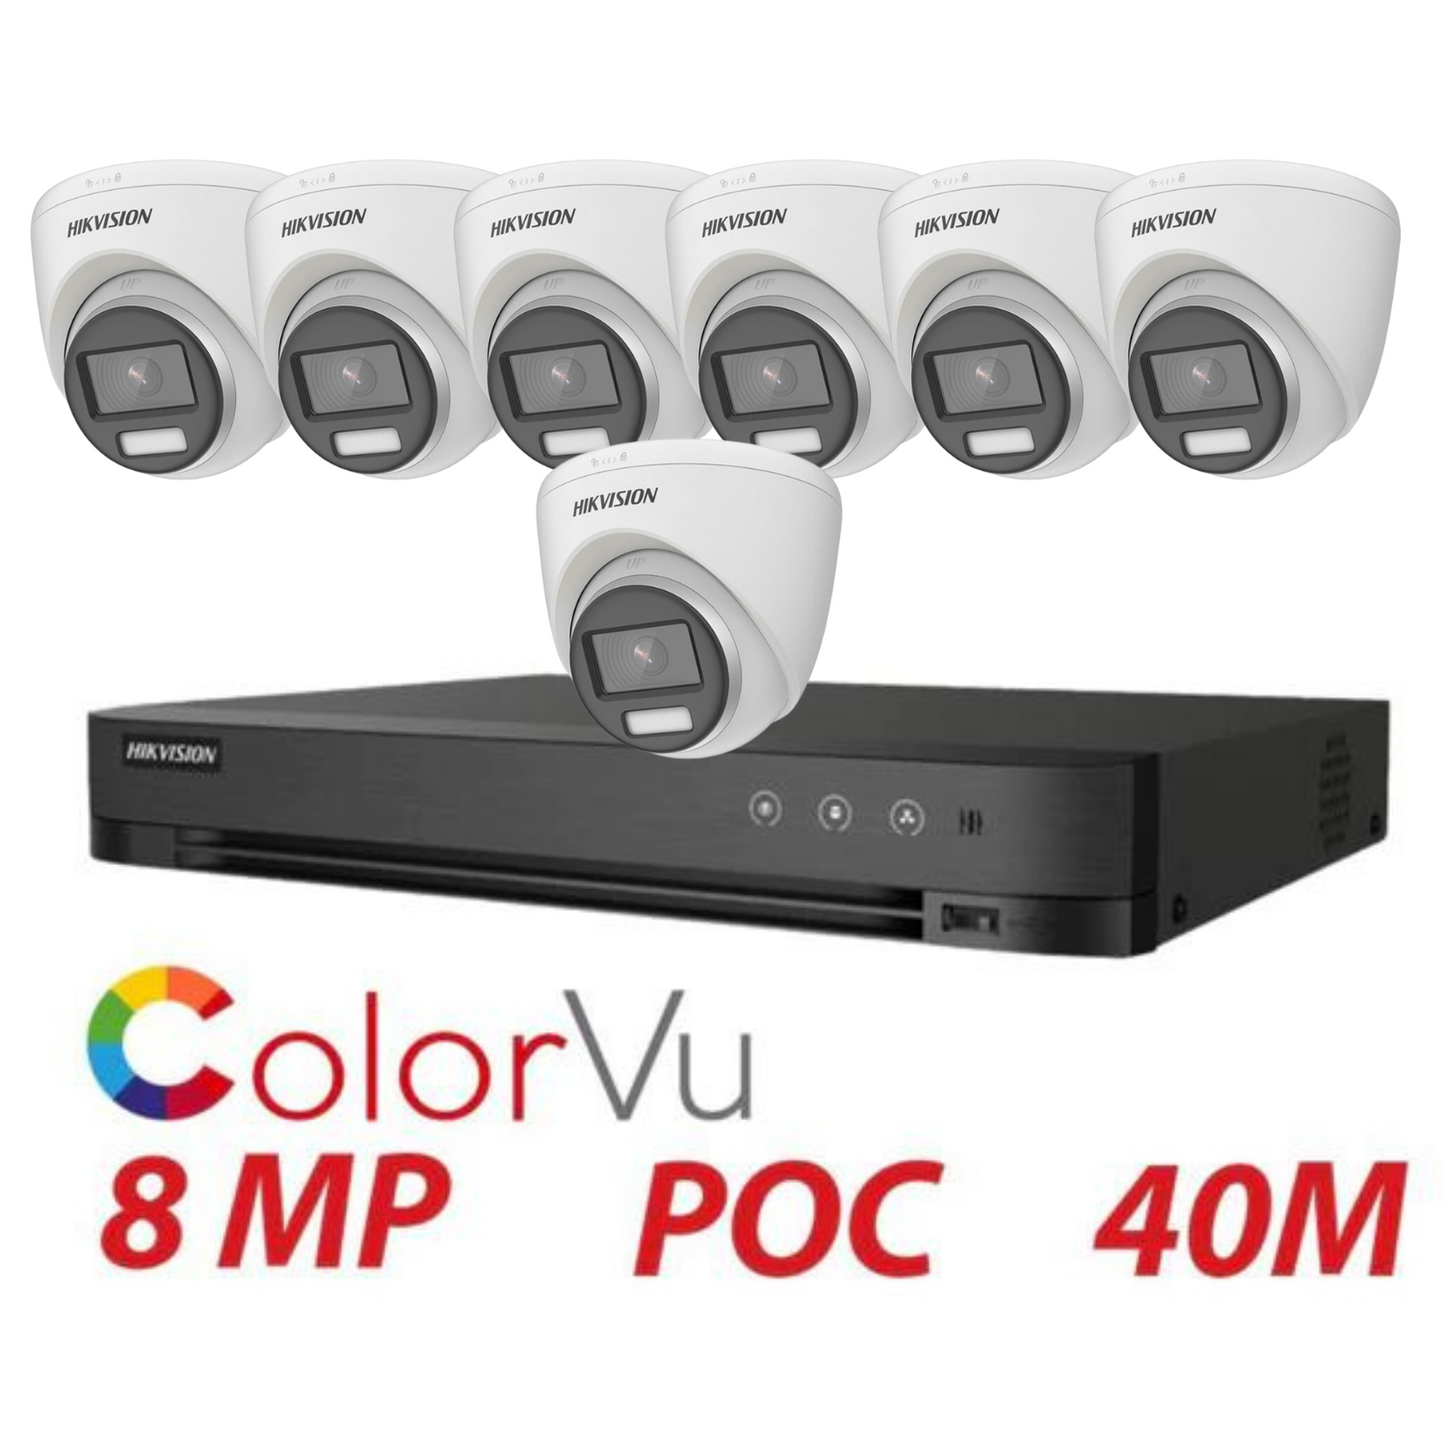 8MP 8CH Hikvision ColorVu System 7X 24HR Color POC DVR Camera Kit